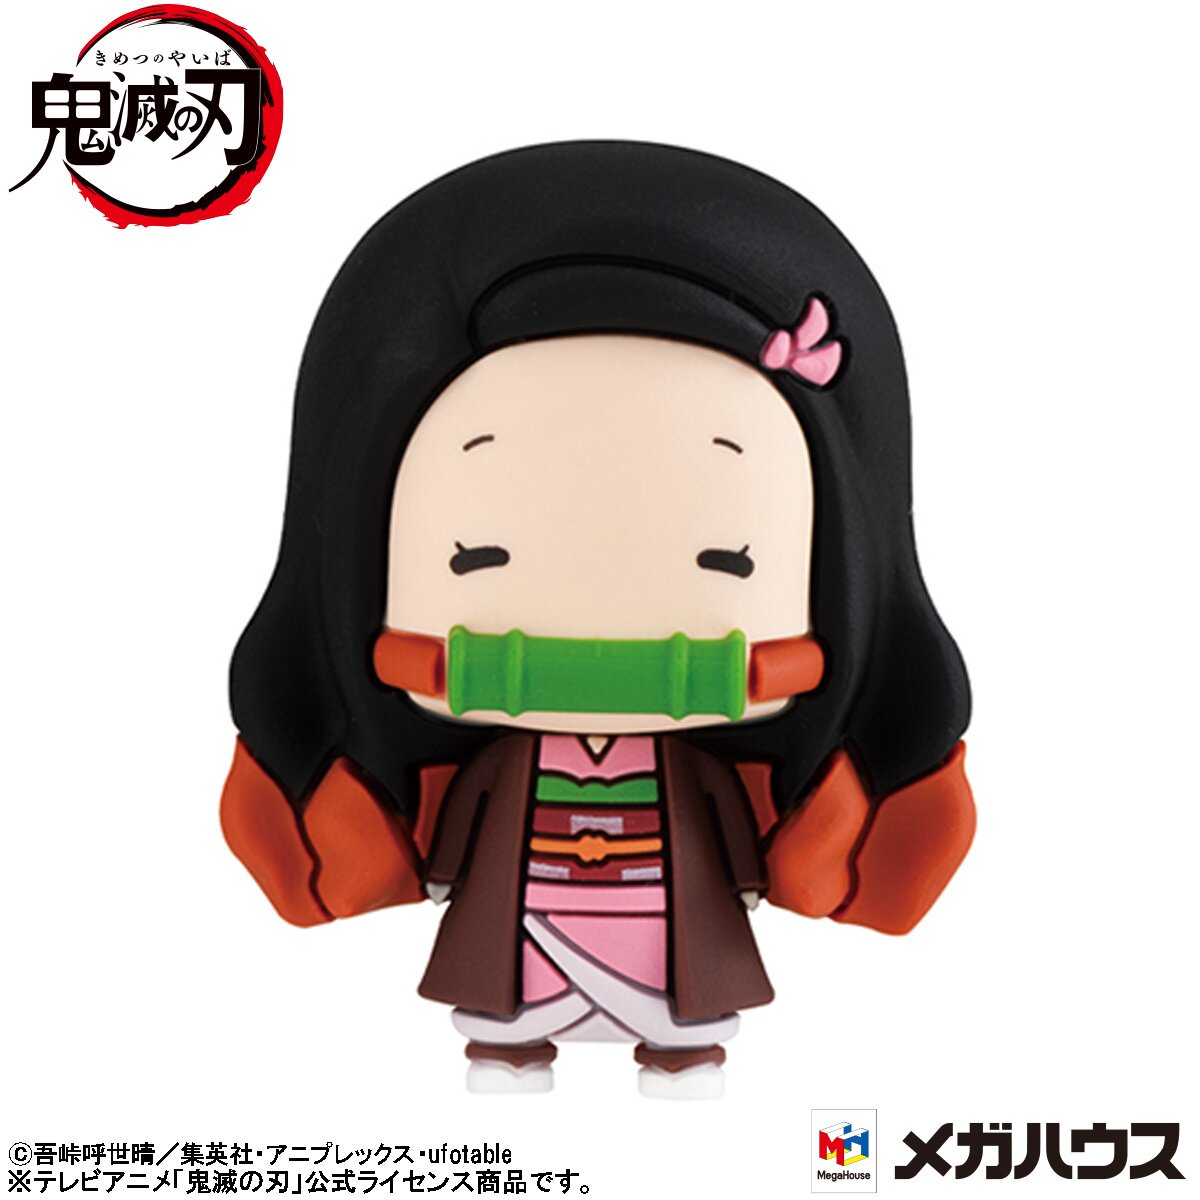 Chokorin Mascot Series Mob Psycho 100 III Complete Box Set: Megahouse 35%  OFF - Tokyo Otaku Mode (TOM)